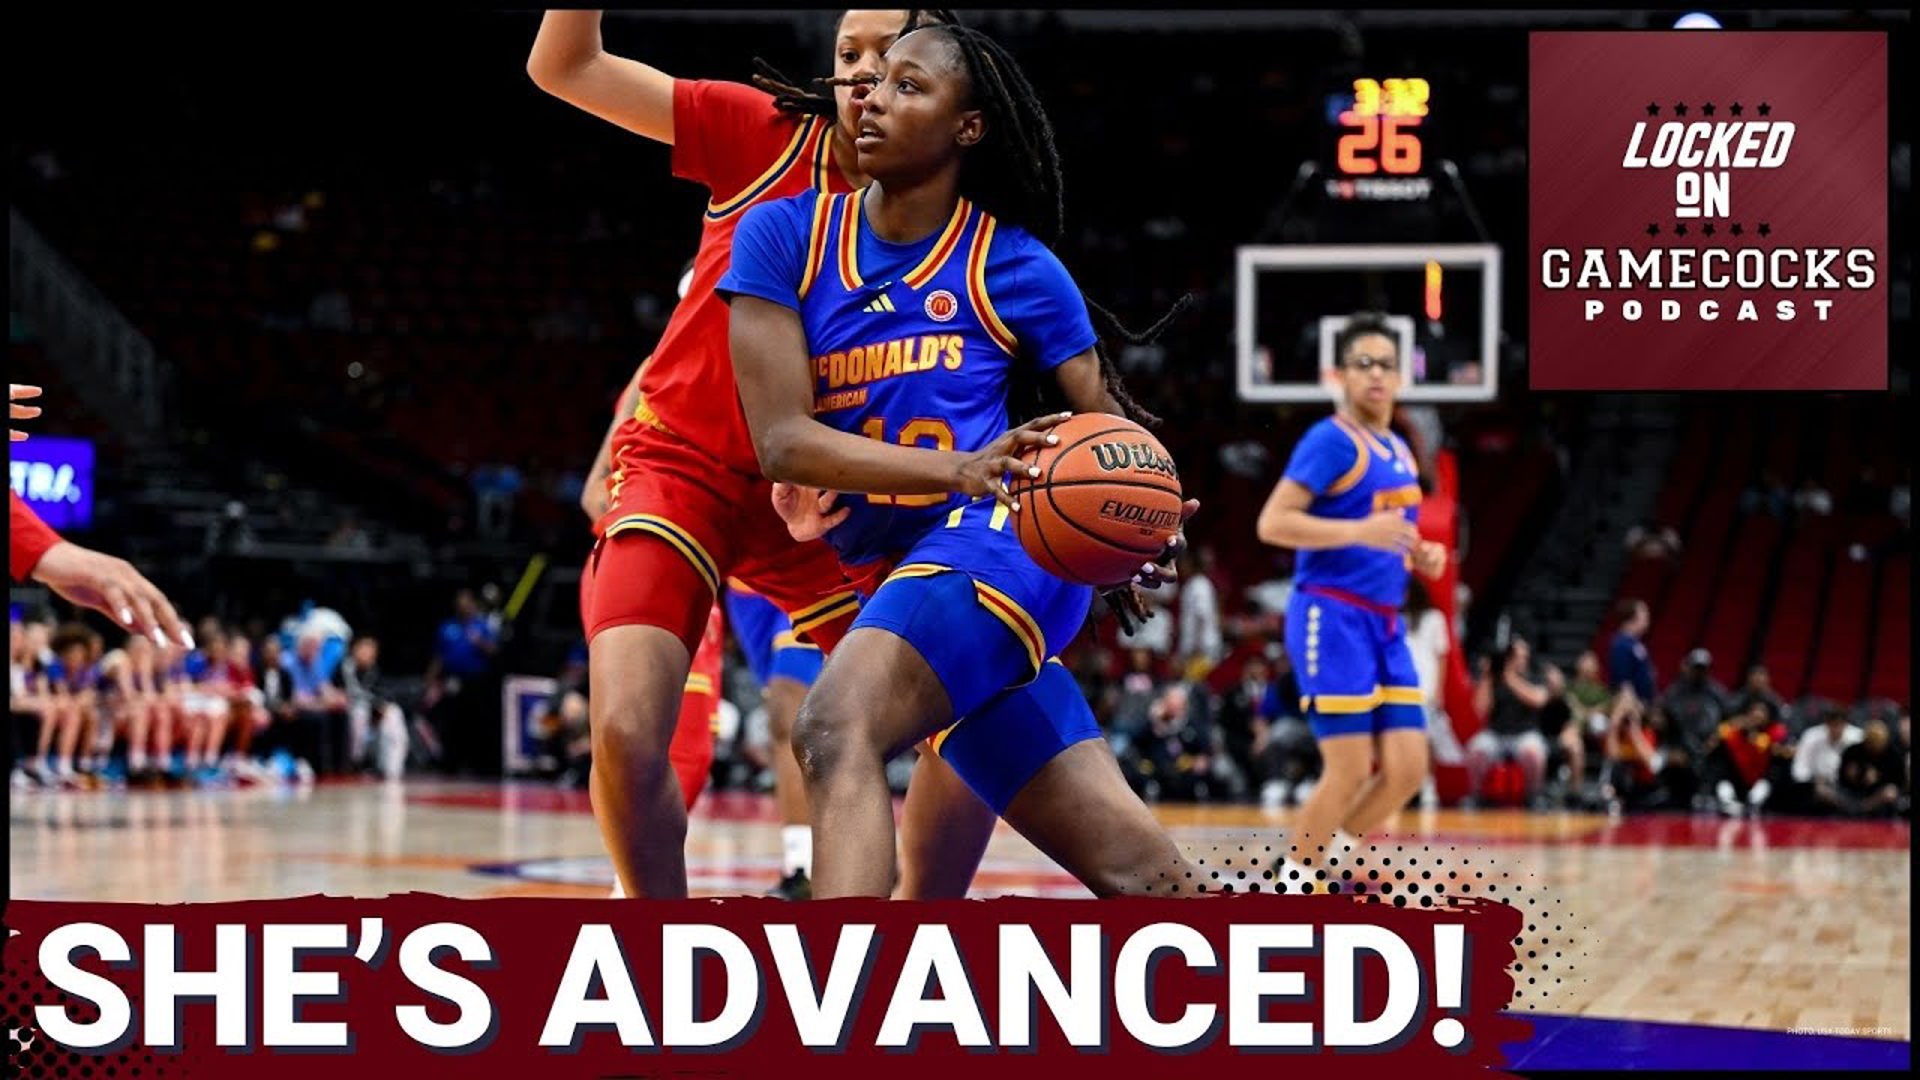 Joyce Edward’s Multi-Sport Background Will Help South Carolina Women’s Basketball Team Next Season!